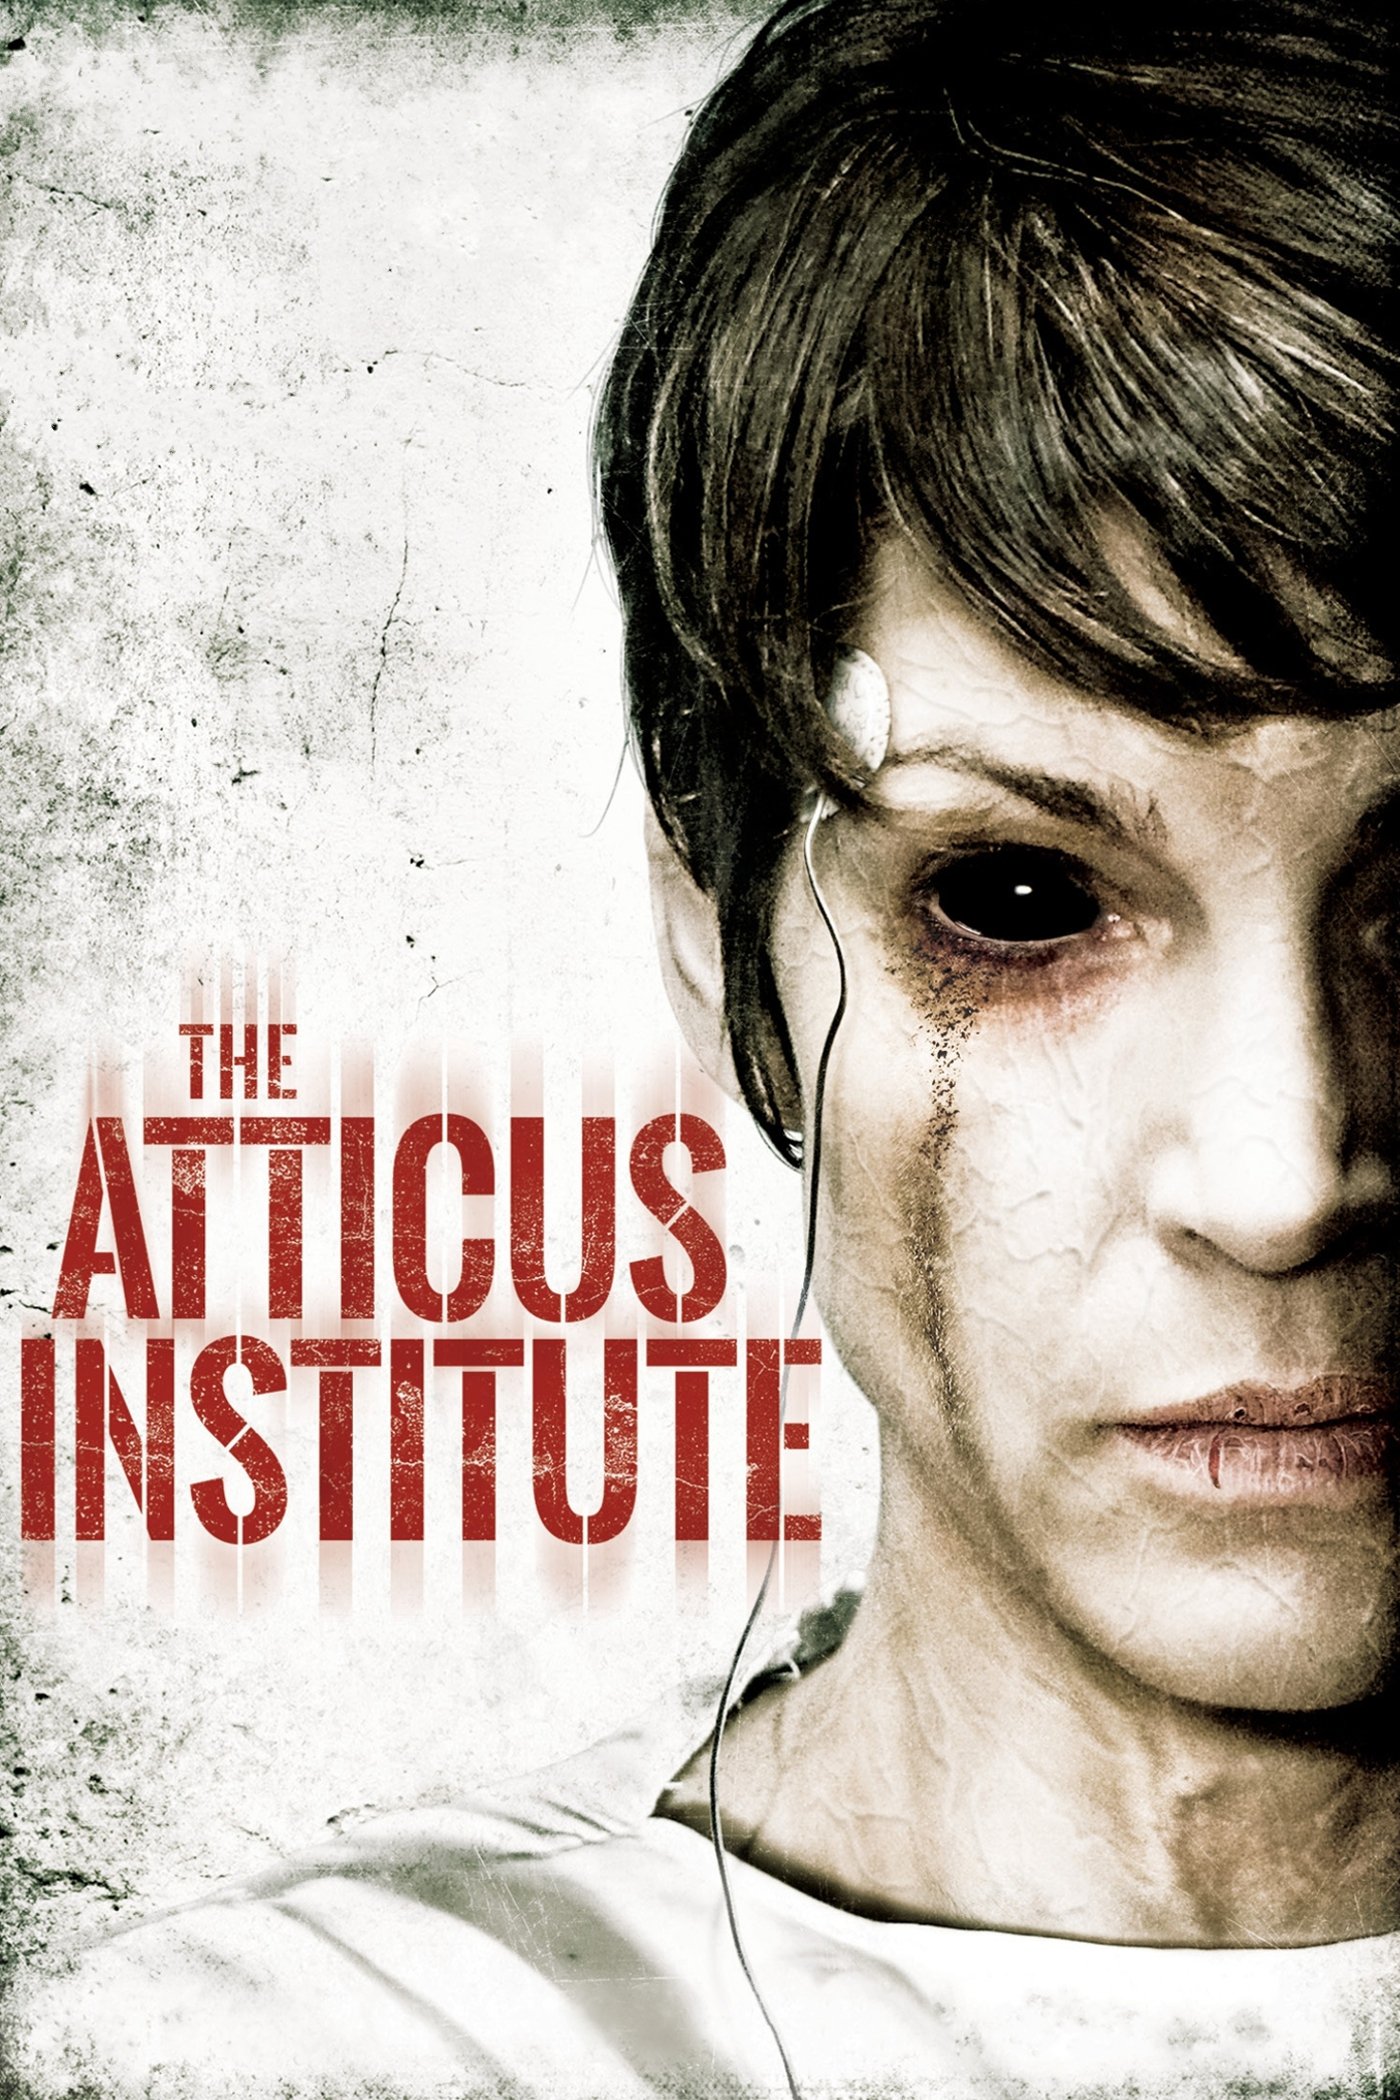 Poster for the movie "The Atticus Institute"